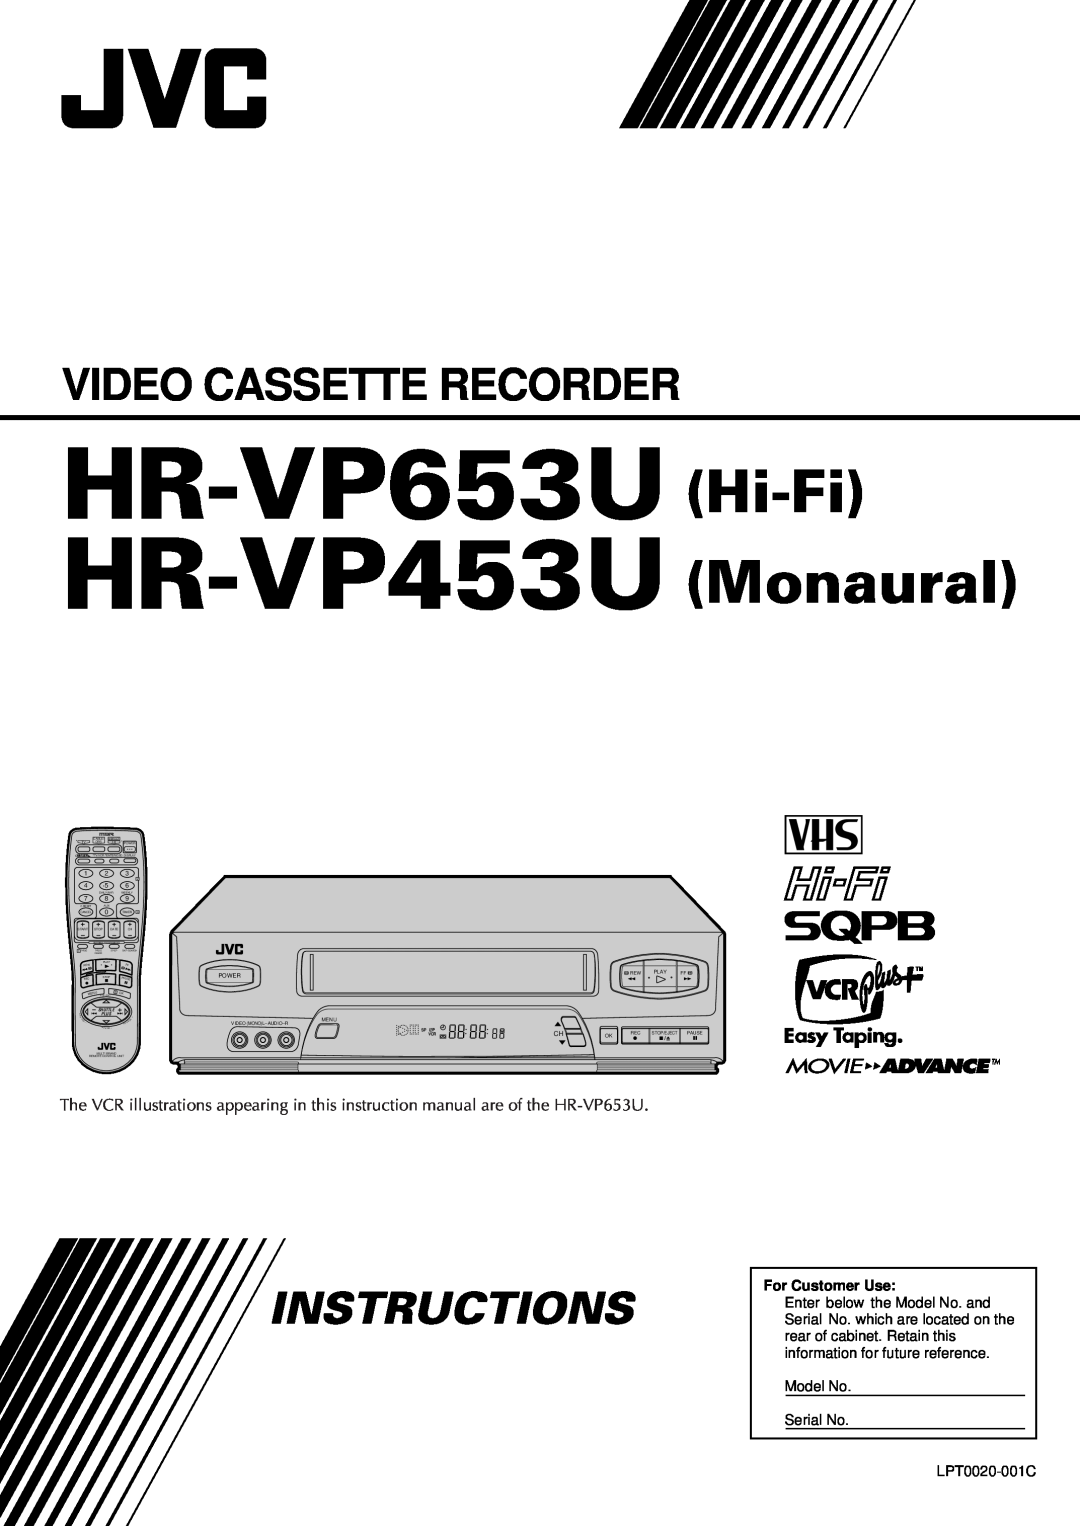 JVC instruction manual HR-VP653U HR-VP453U, Hi-Fi Monaural, Video Cassette Recorder, Instructions, For Customer Use 